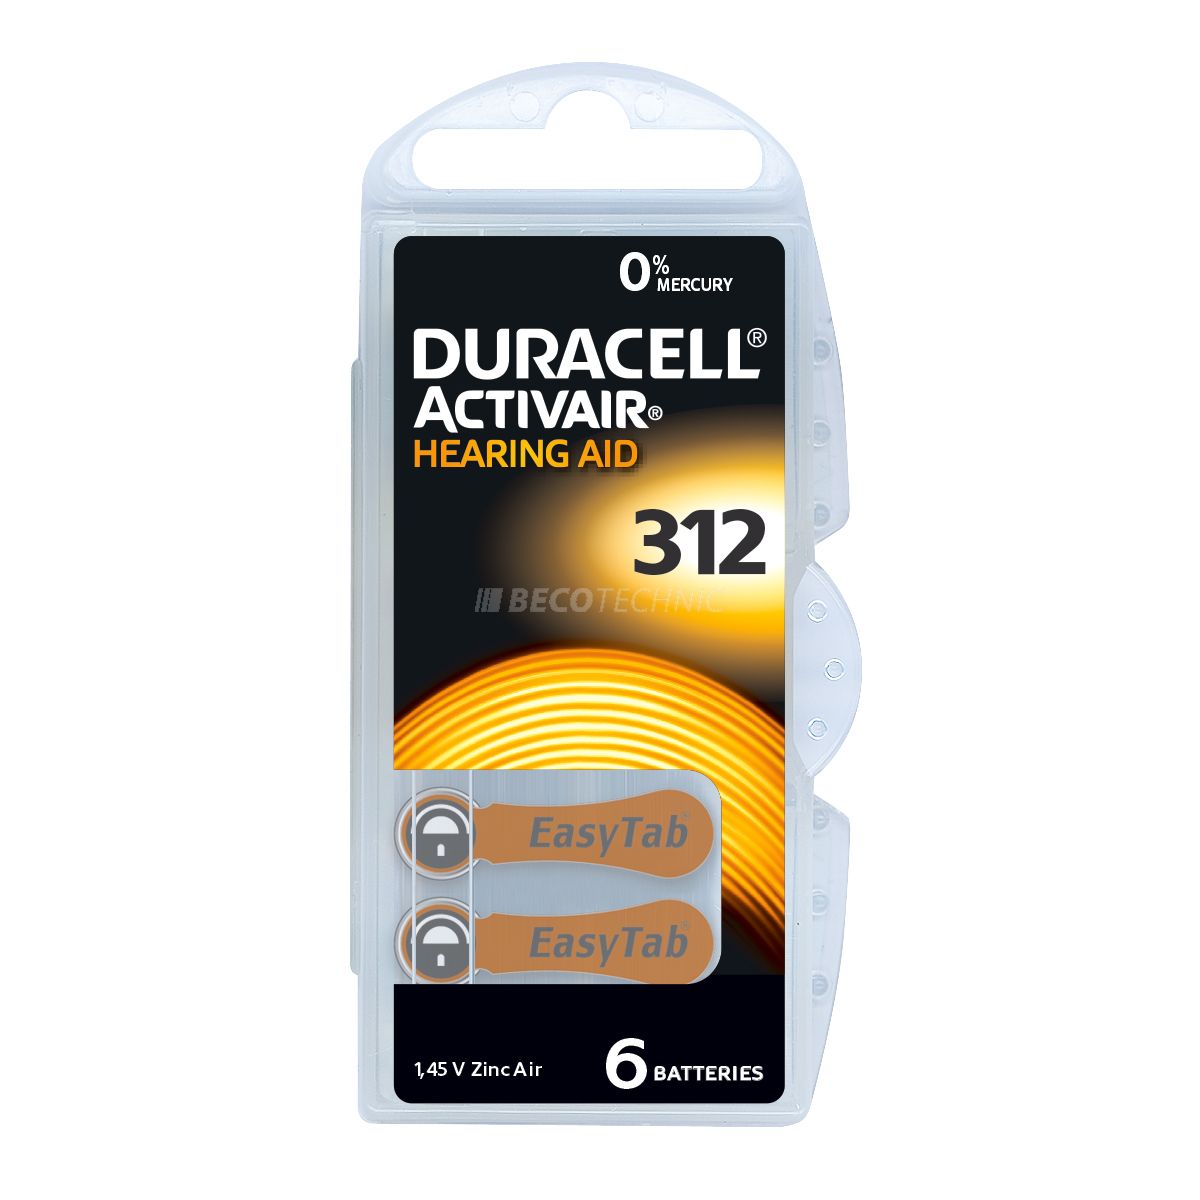 DURACELL ACTIVAIR PACK 6 Hearing aid batteries Zinc Air No. 312, blister